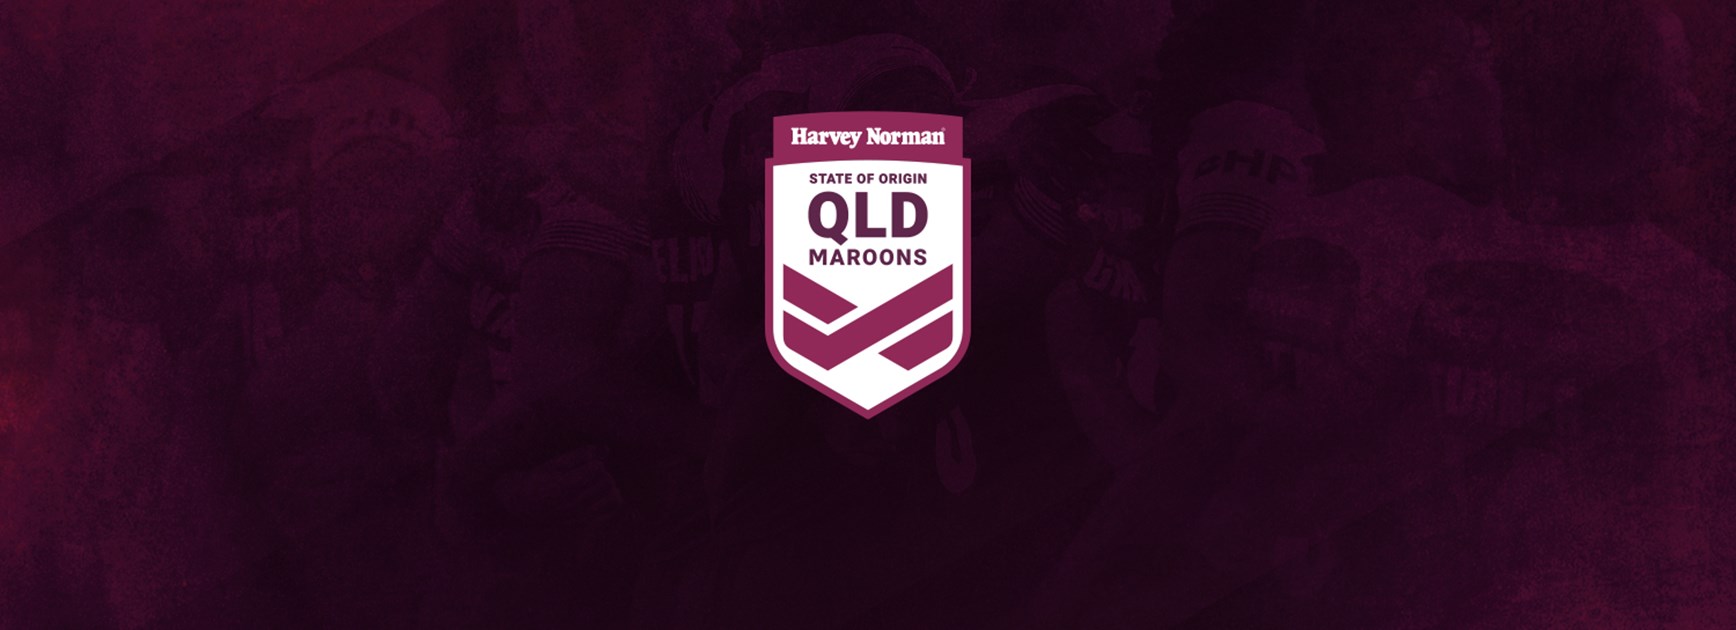 Harvey Norman Queensland Maroons updated squad